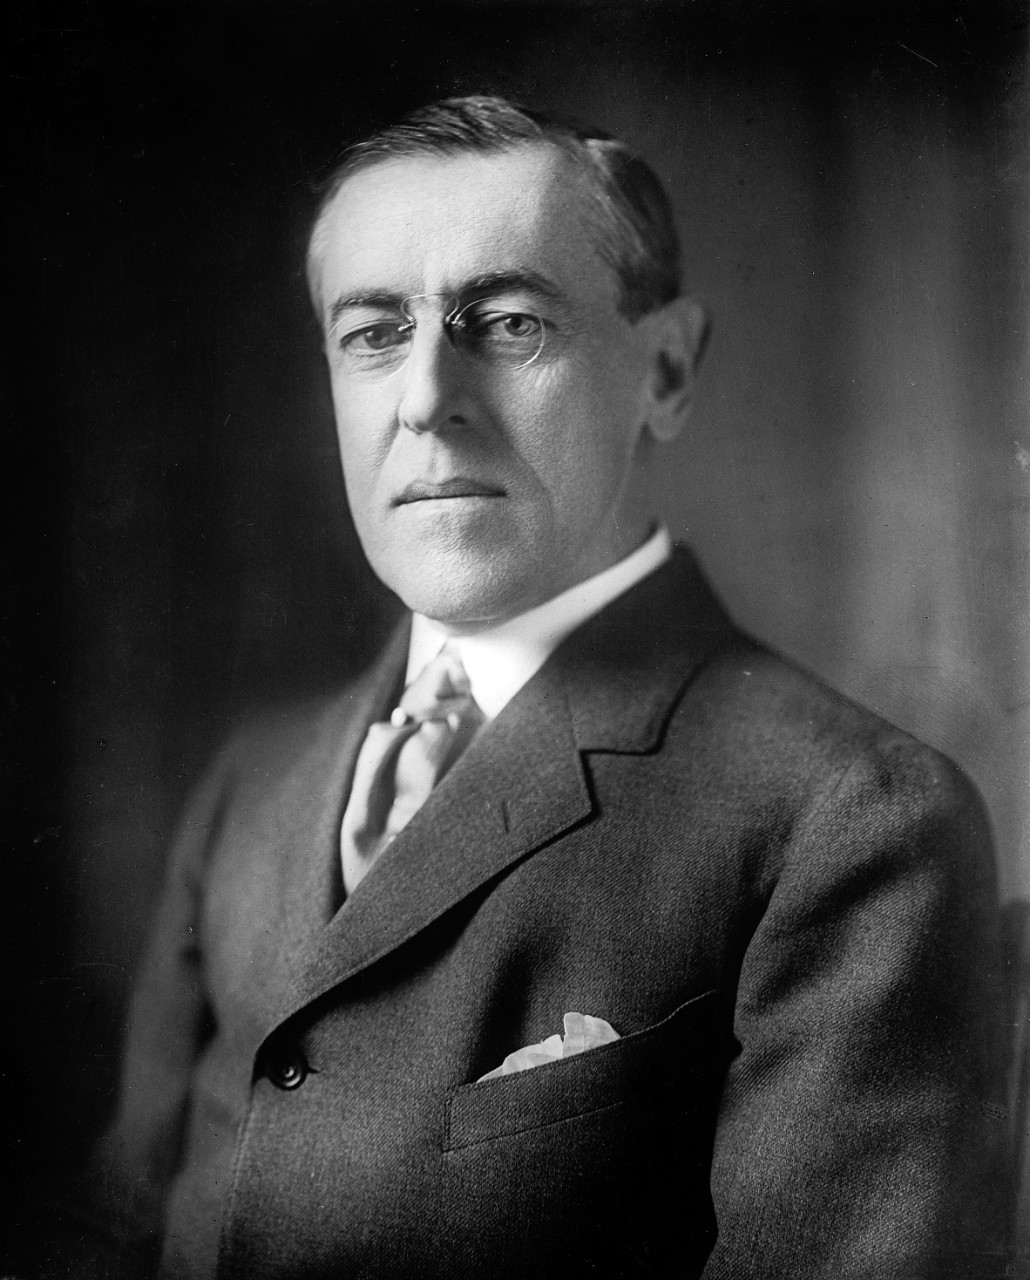 <p>LC-DIG-det-4a26353: President Woodrow Wilson, between 1900-1920.&nbsp;</p>
